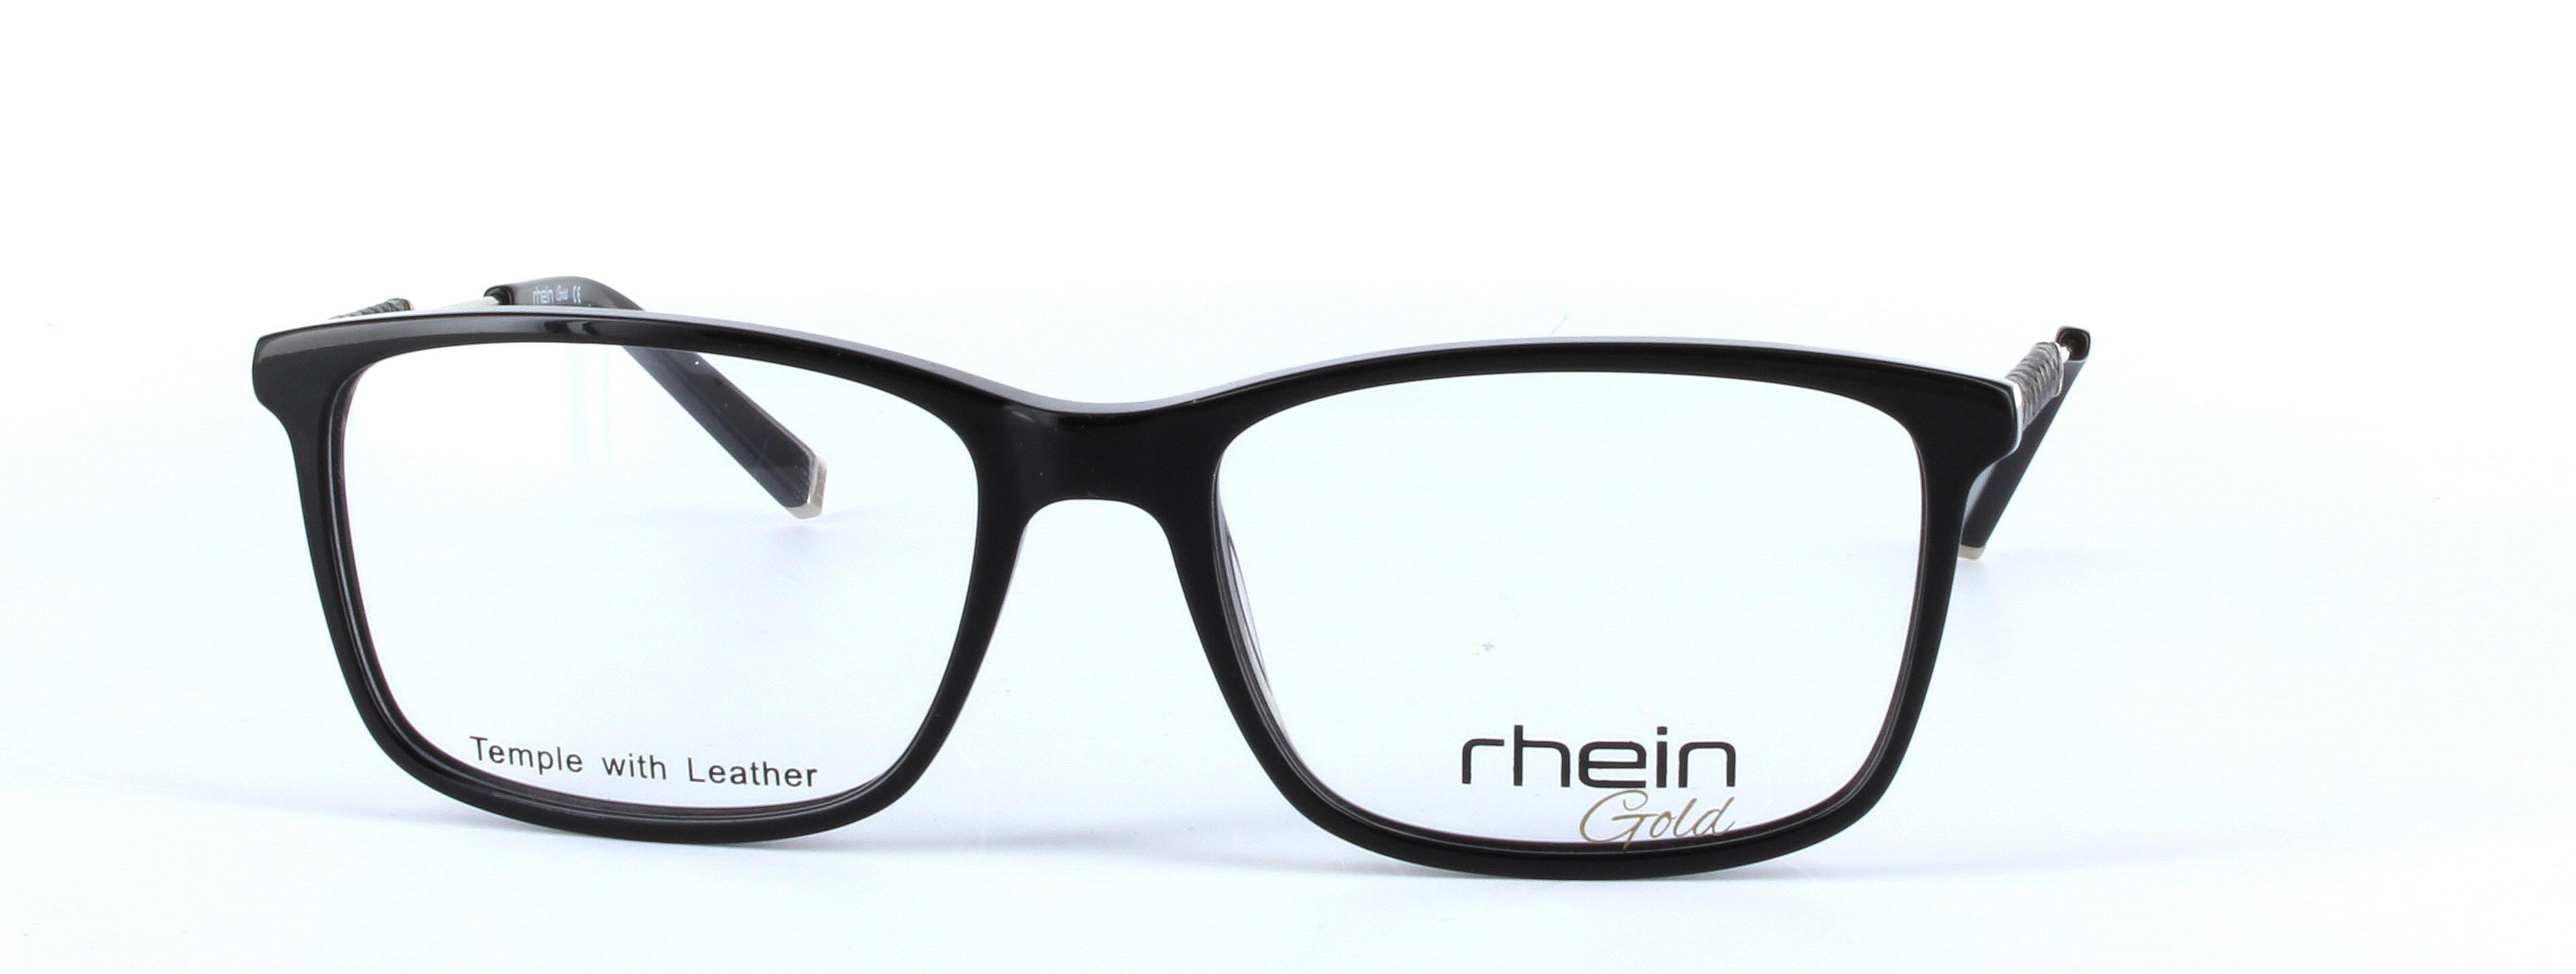 Durham Black Full Rim Oval Rectangular Plastic Glasses - Image View 5